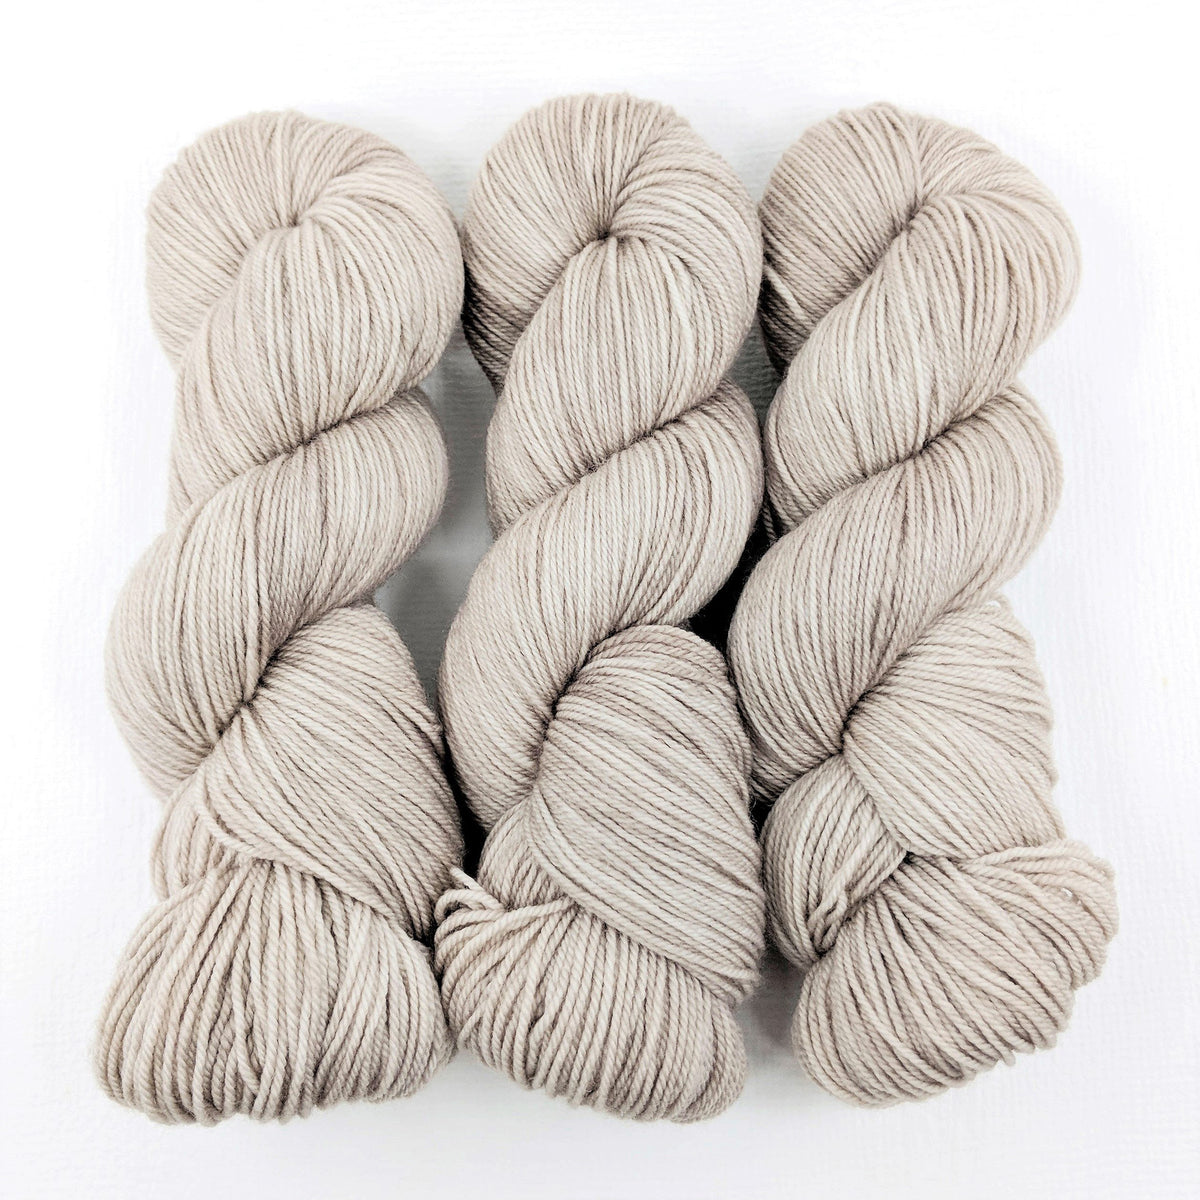 The Softer Side of Linen - Nettle Soft DK - Dyed Stock